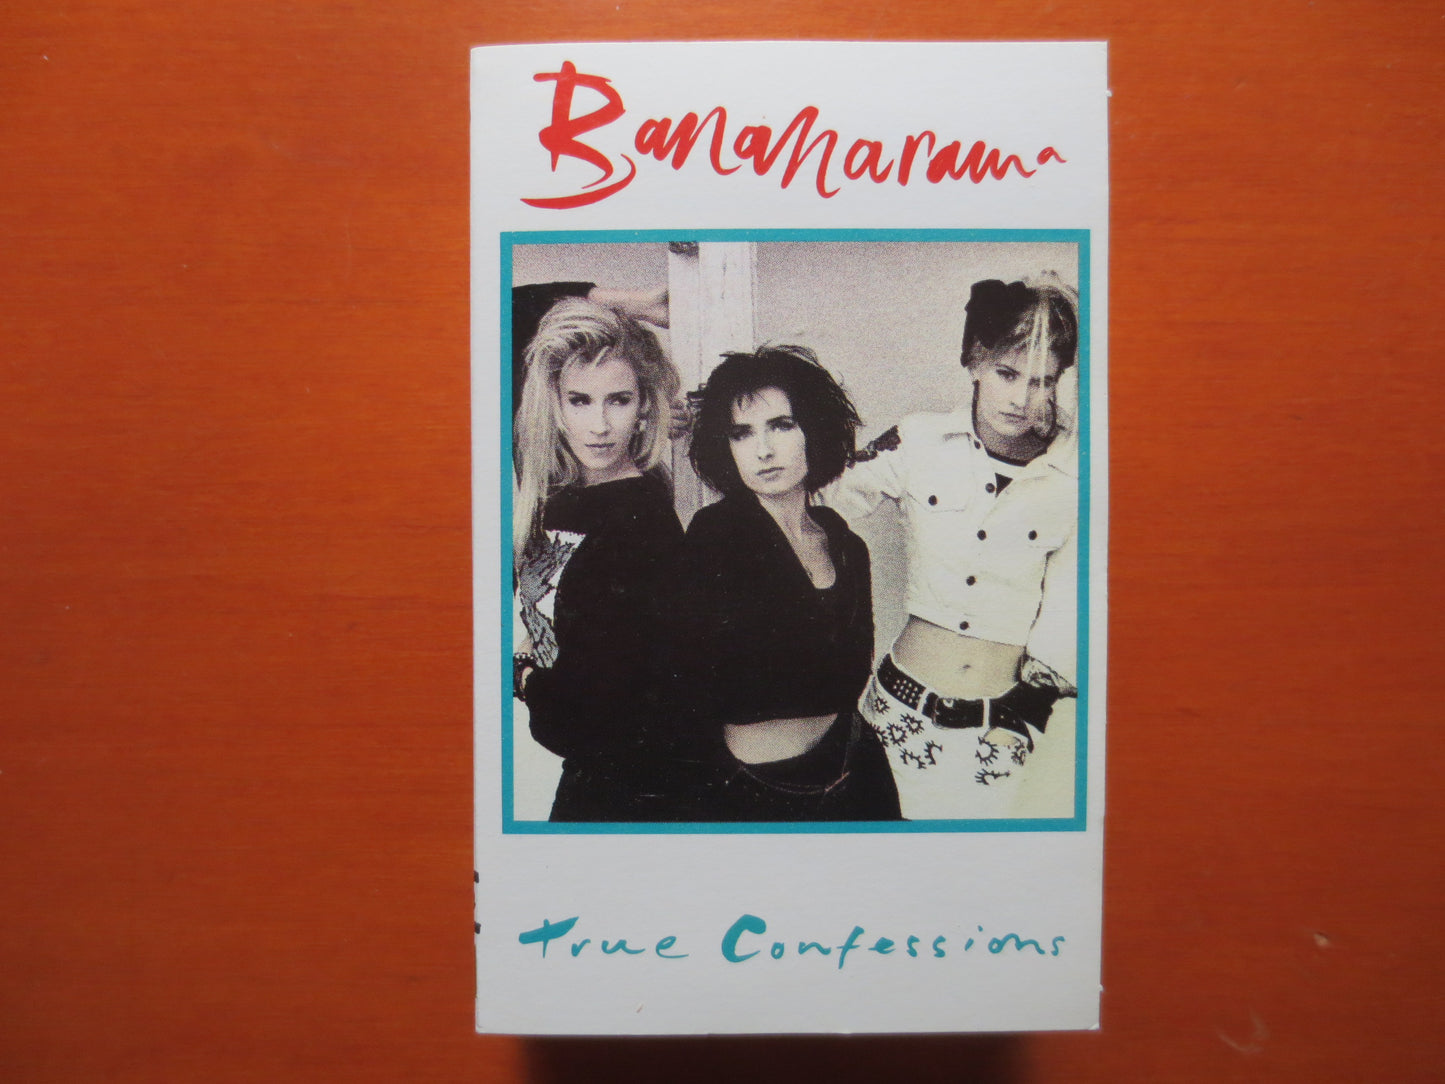 BANANARAMA Tape, TRUE Confessions, BANANARAMA Album, Bananarama Music, Tape Cassette, Vintage Cassette, 1986 Cassette